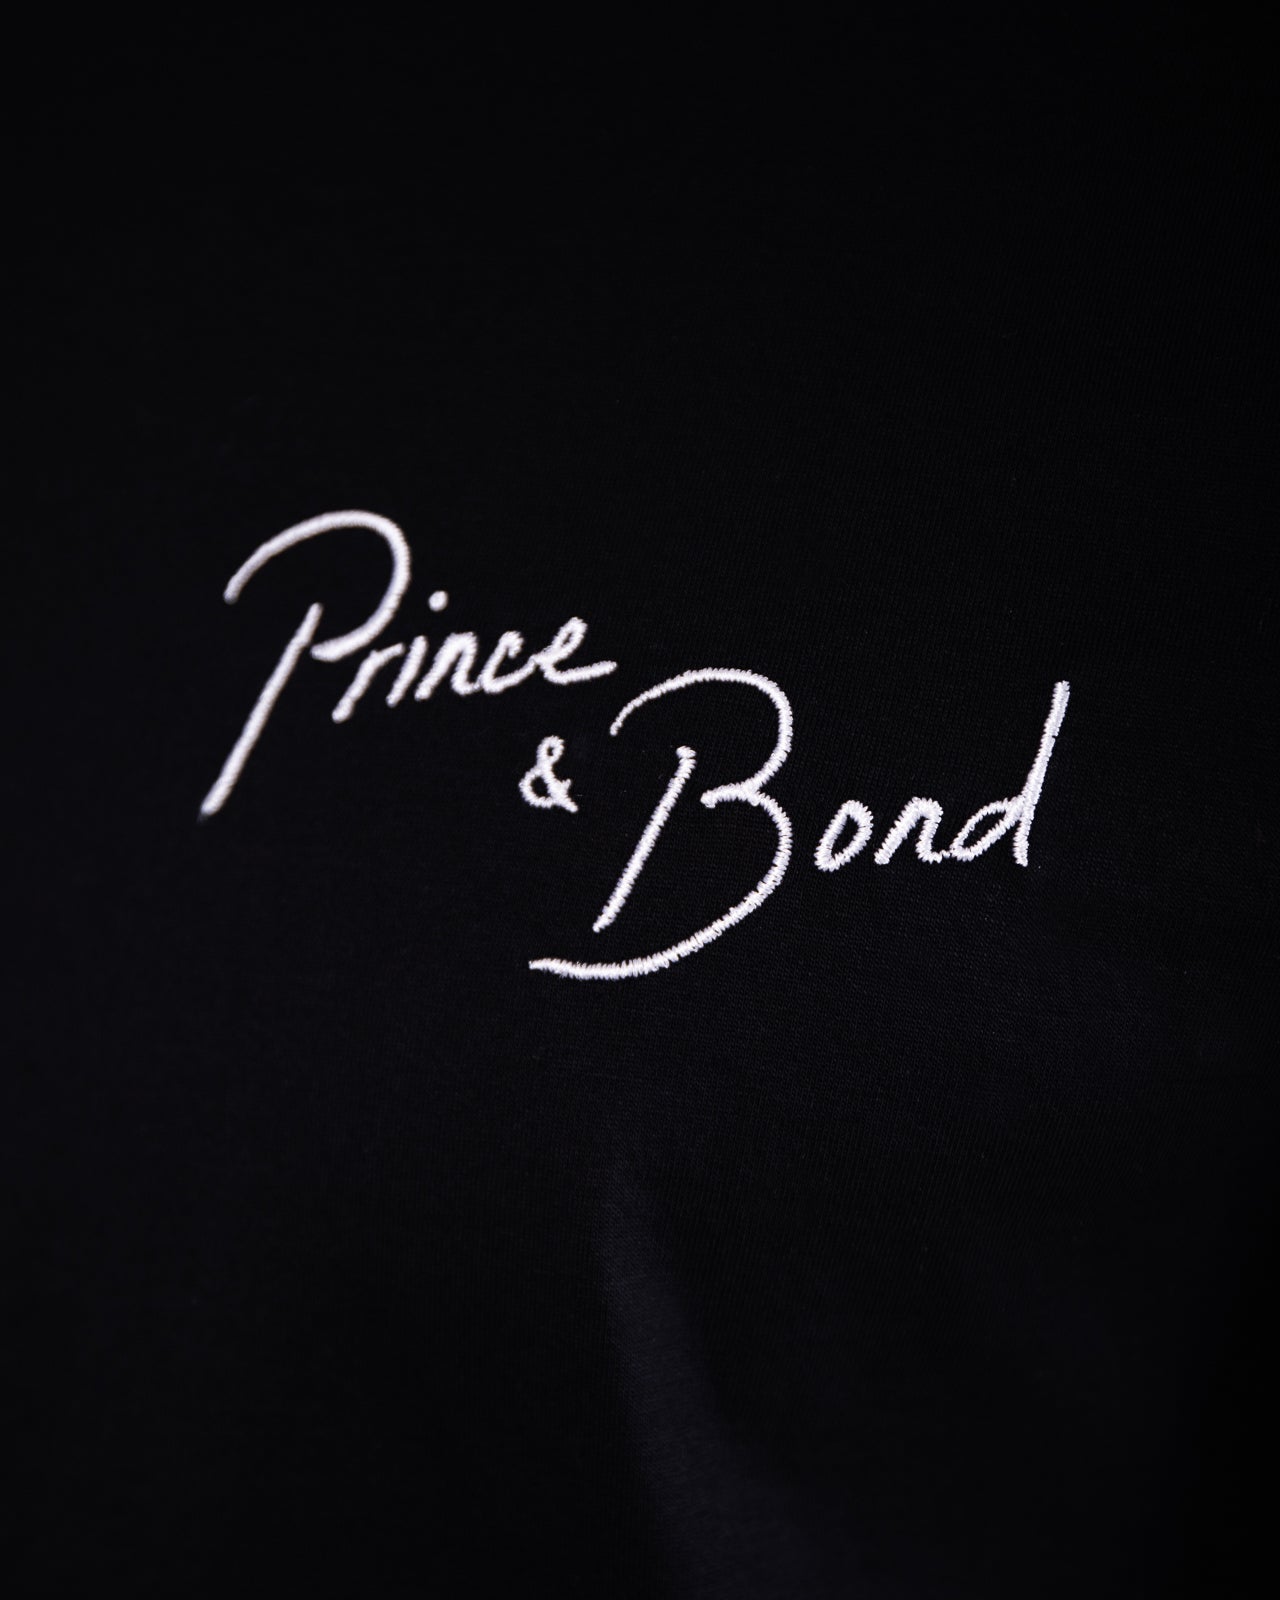 Prince and Bond Marine T